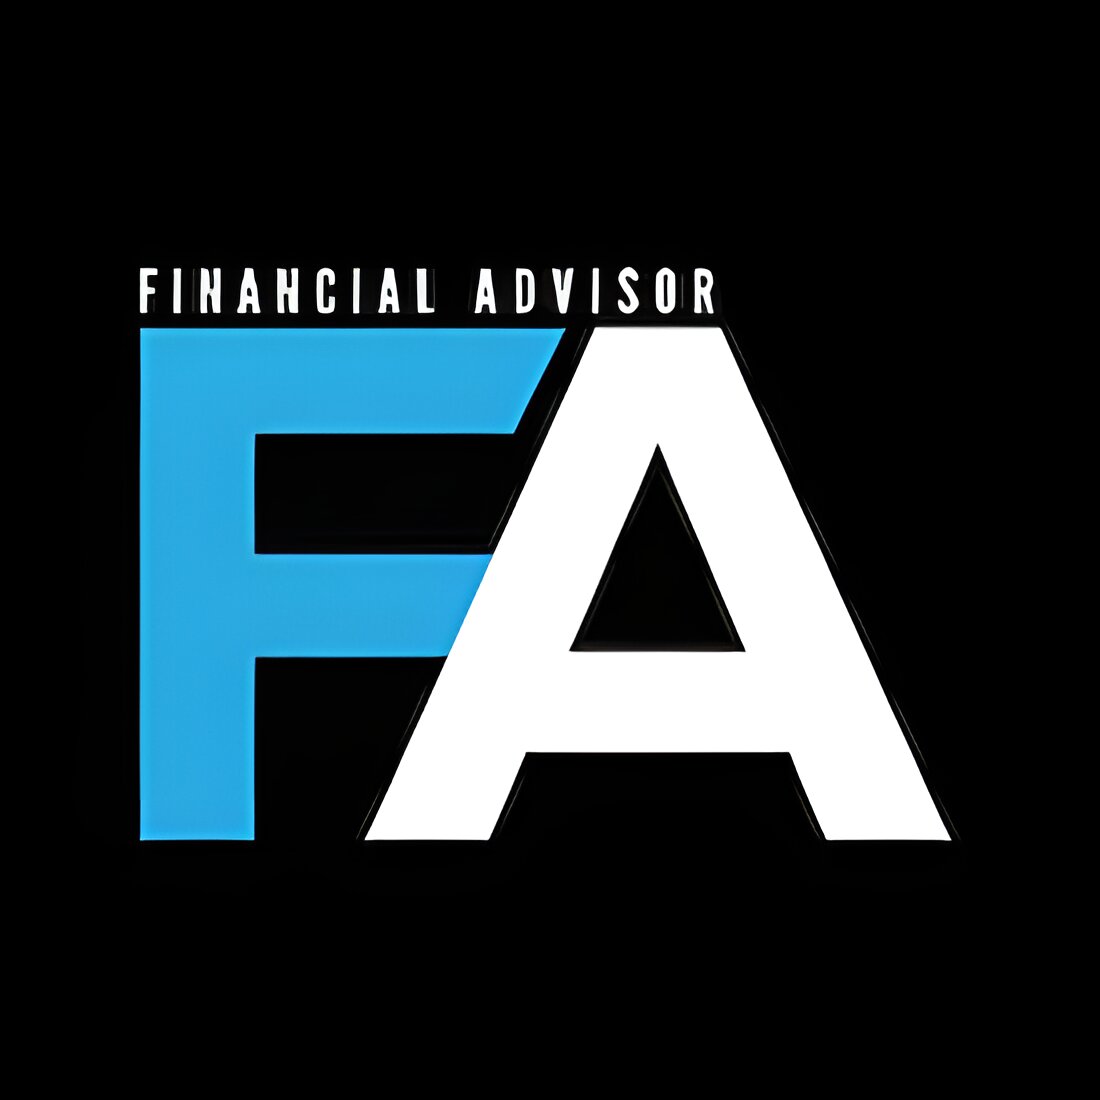 Free Subscription to Financial Advisor Magazine